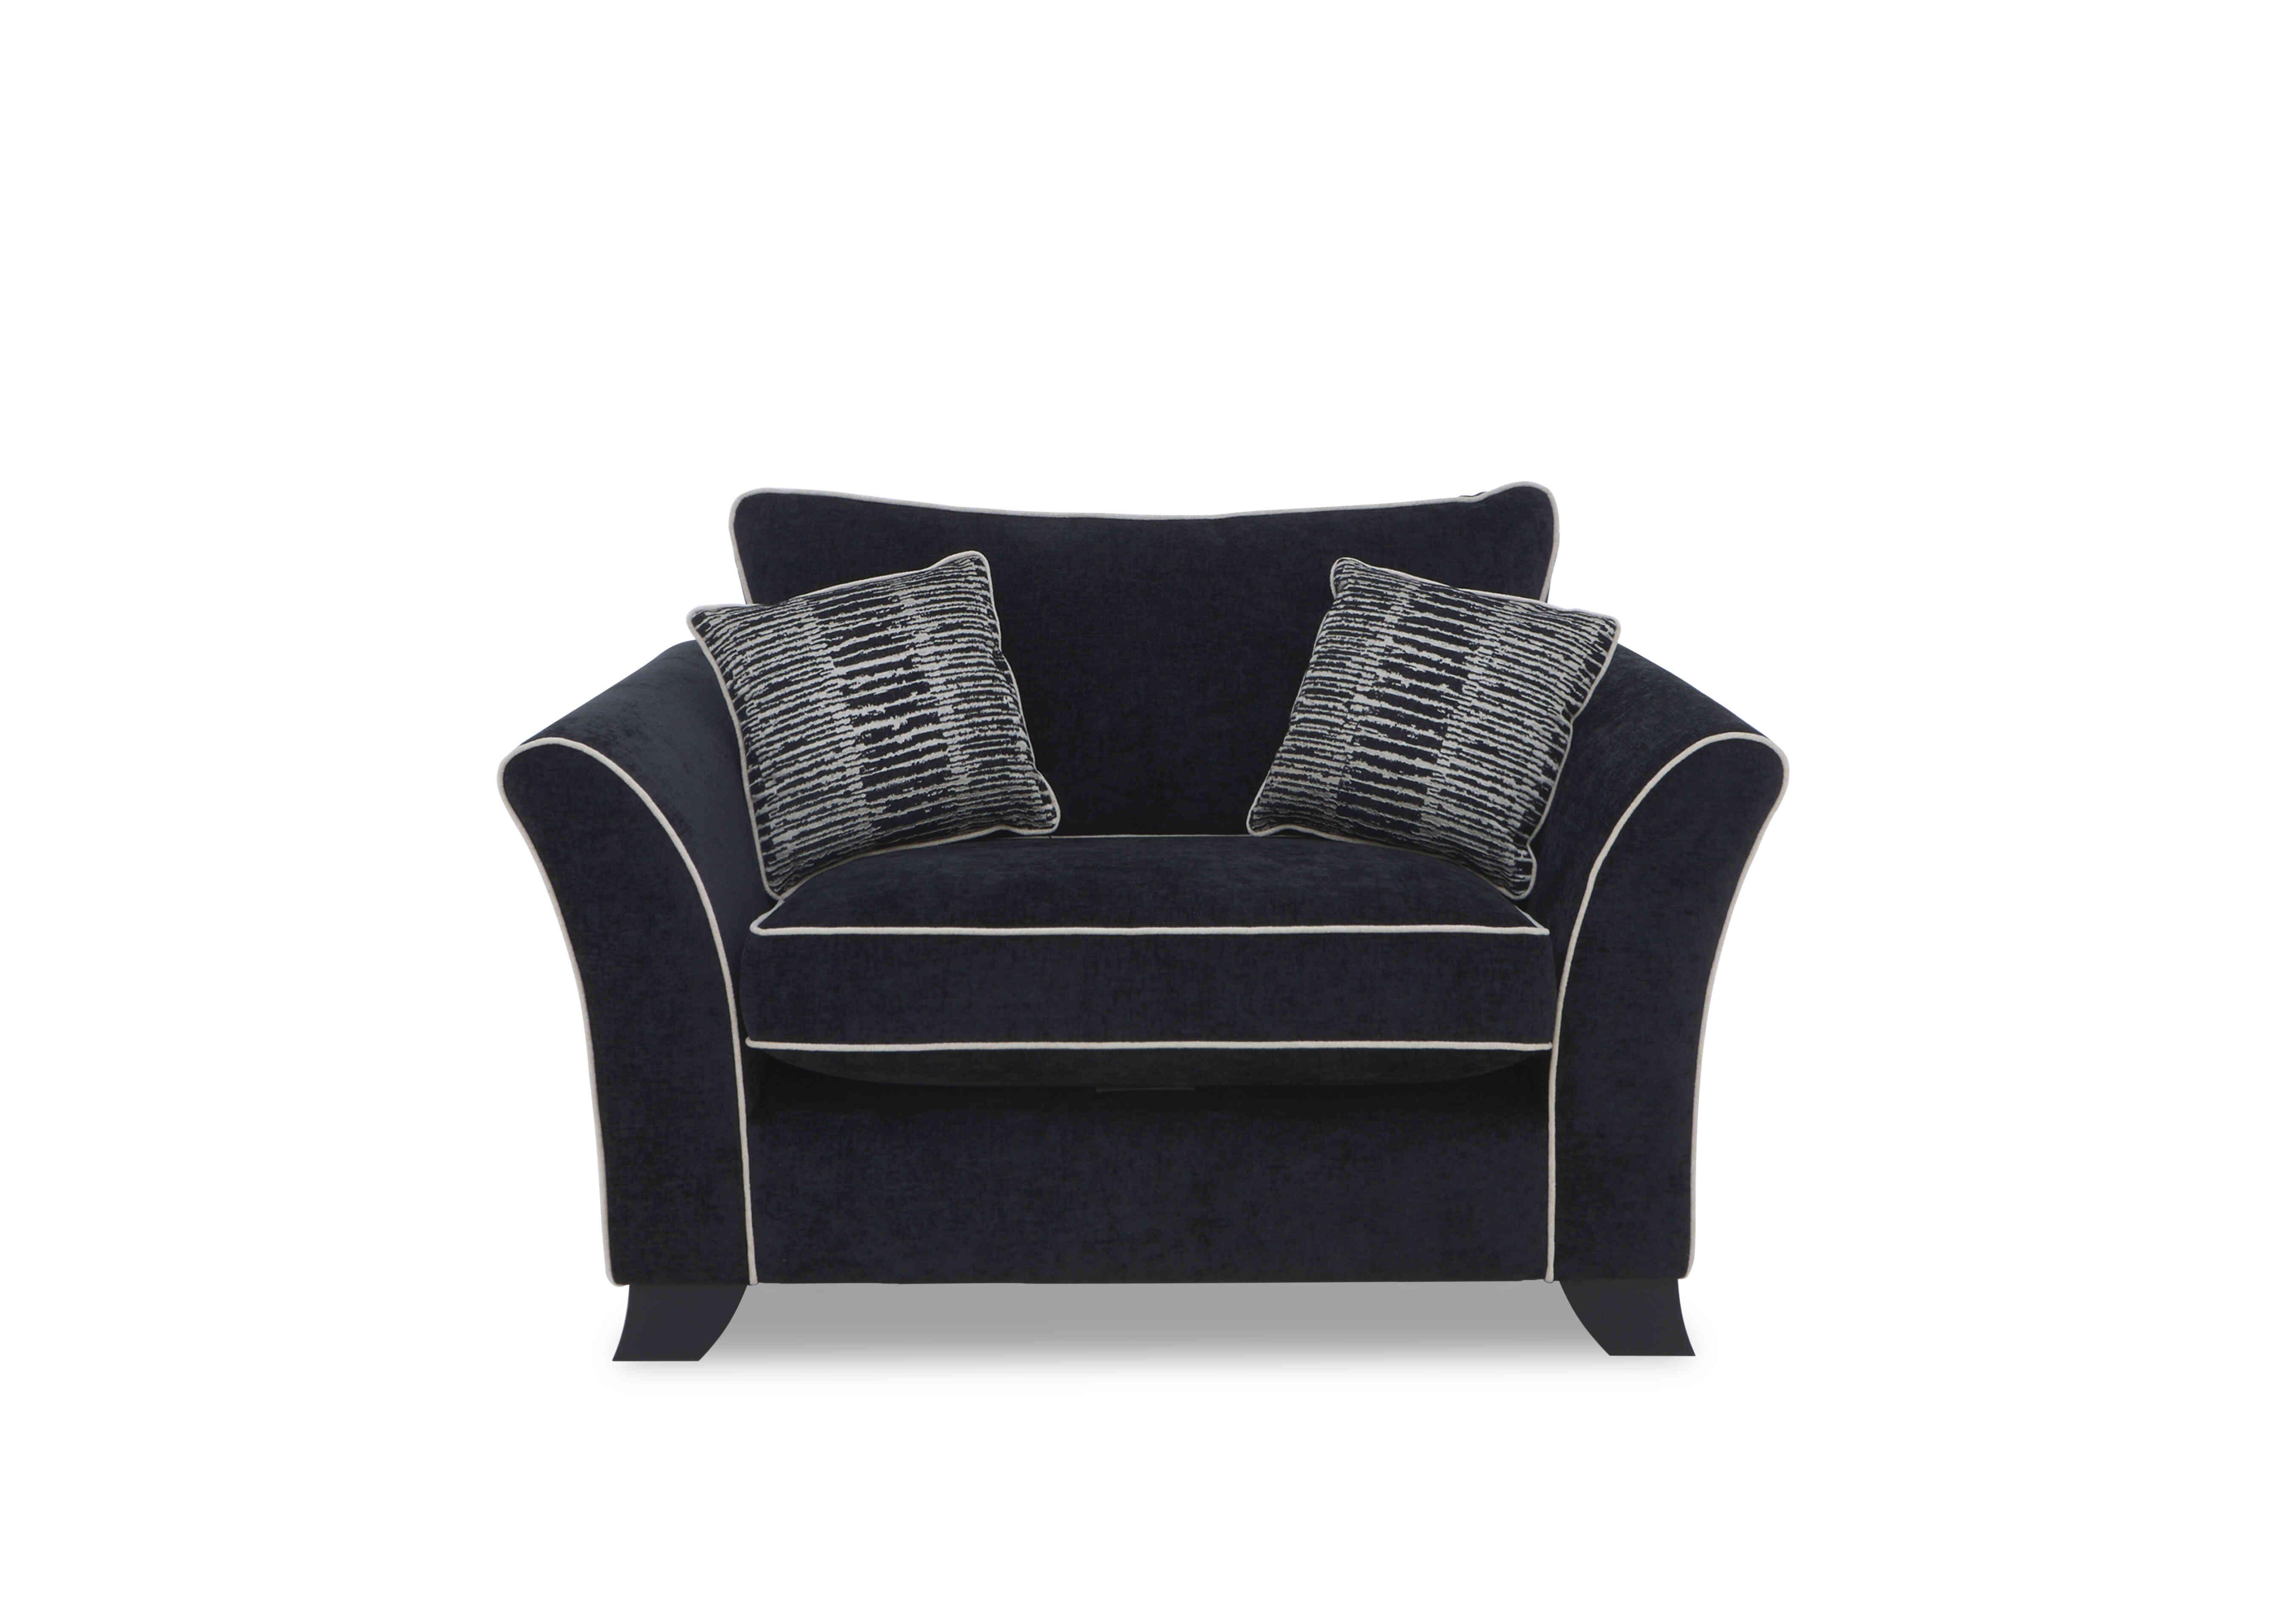 Stellar Classic Back Snuggler Sofa Bed in Bolero Ebony Contrast on Furniture Village